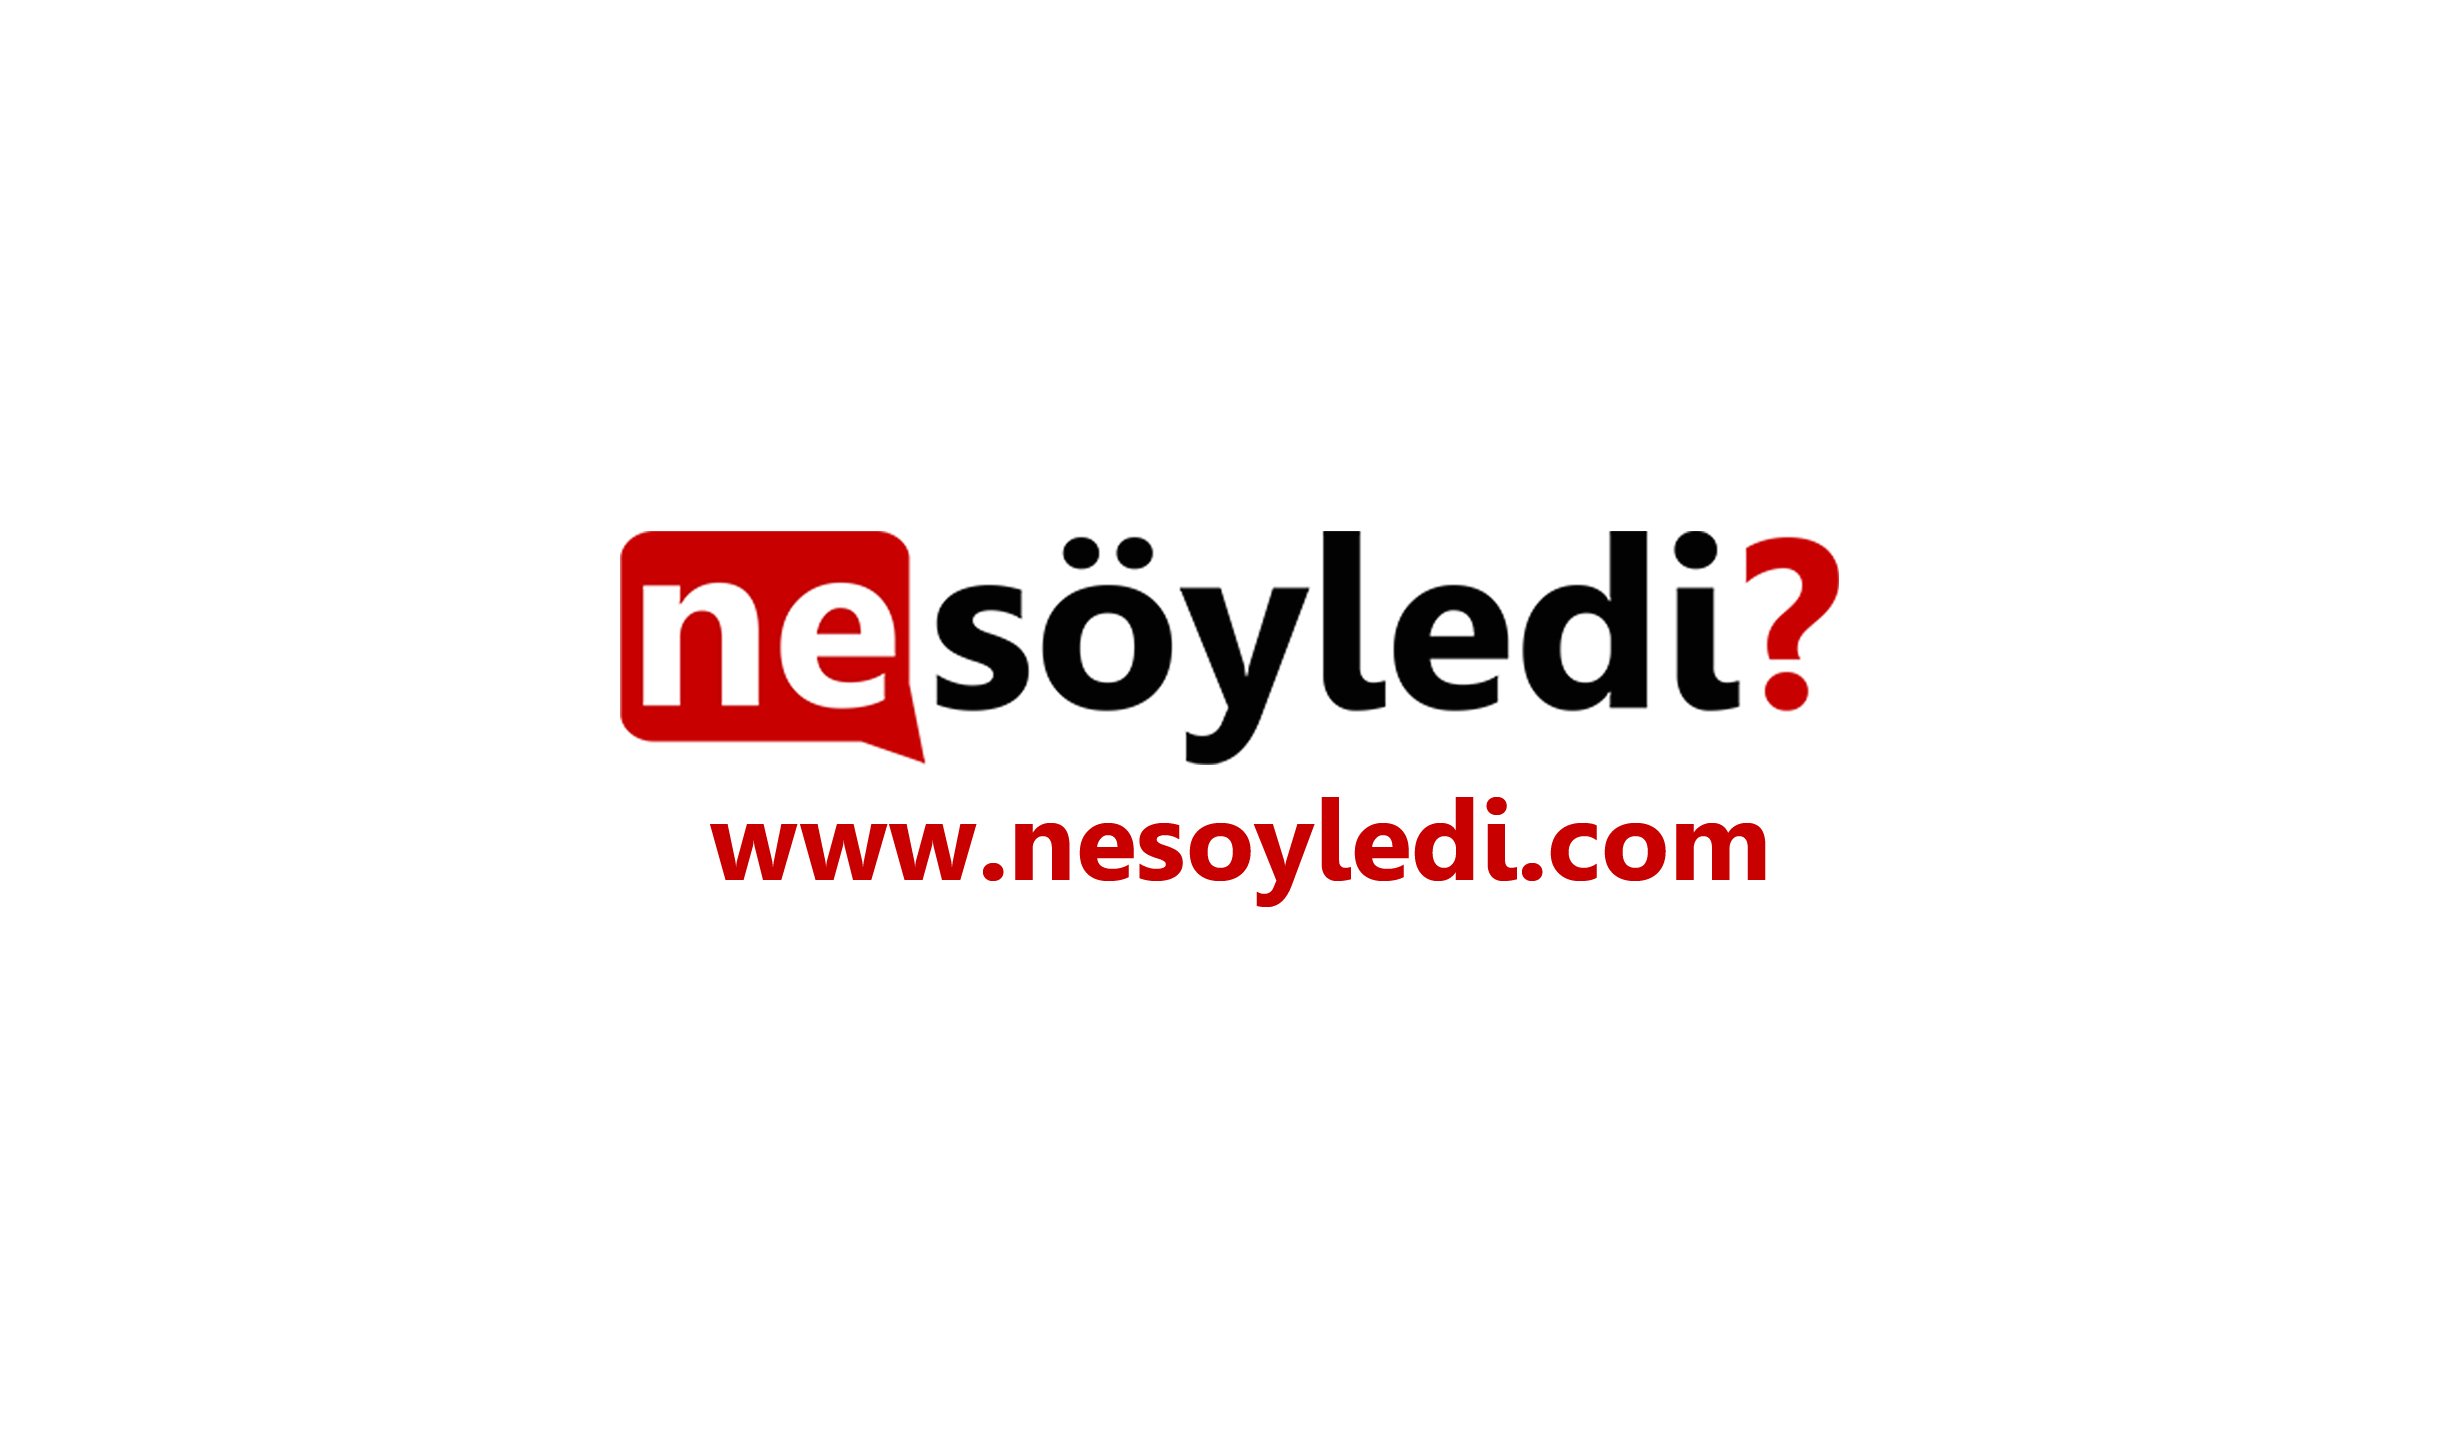 nesoyledi-com-logo